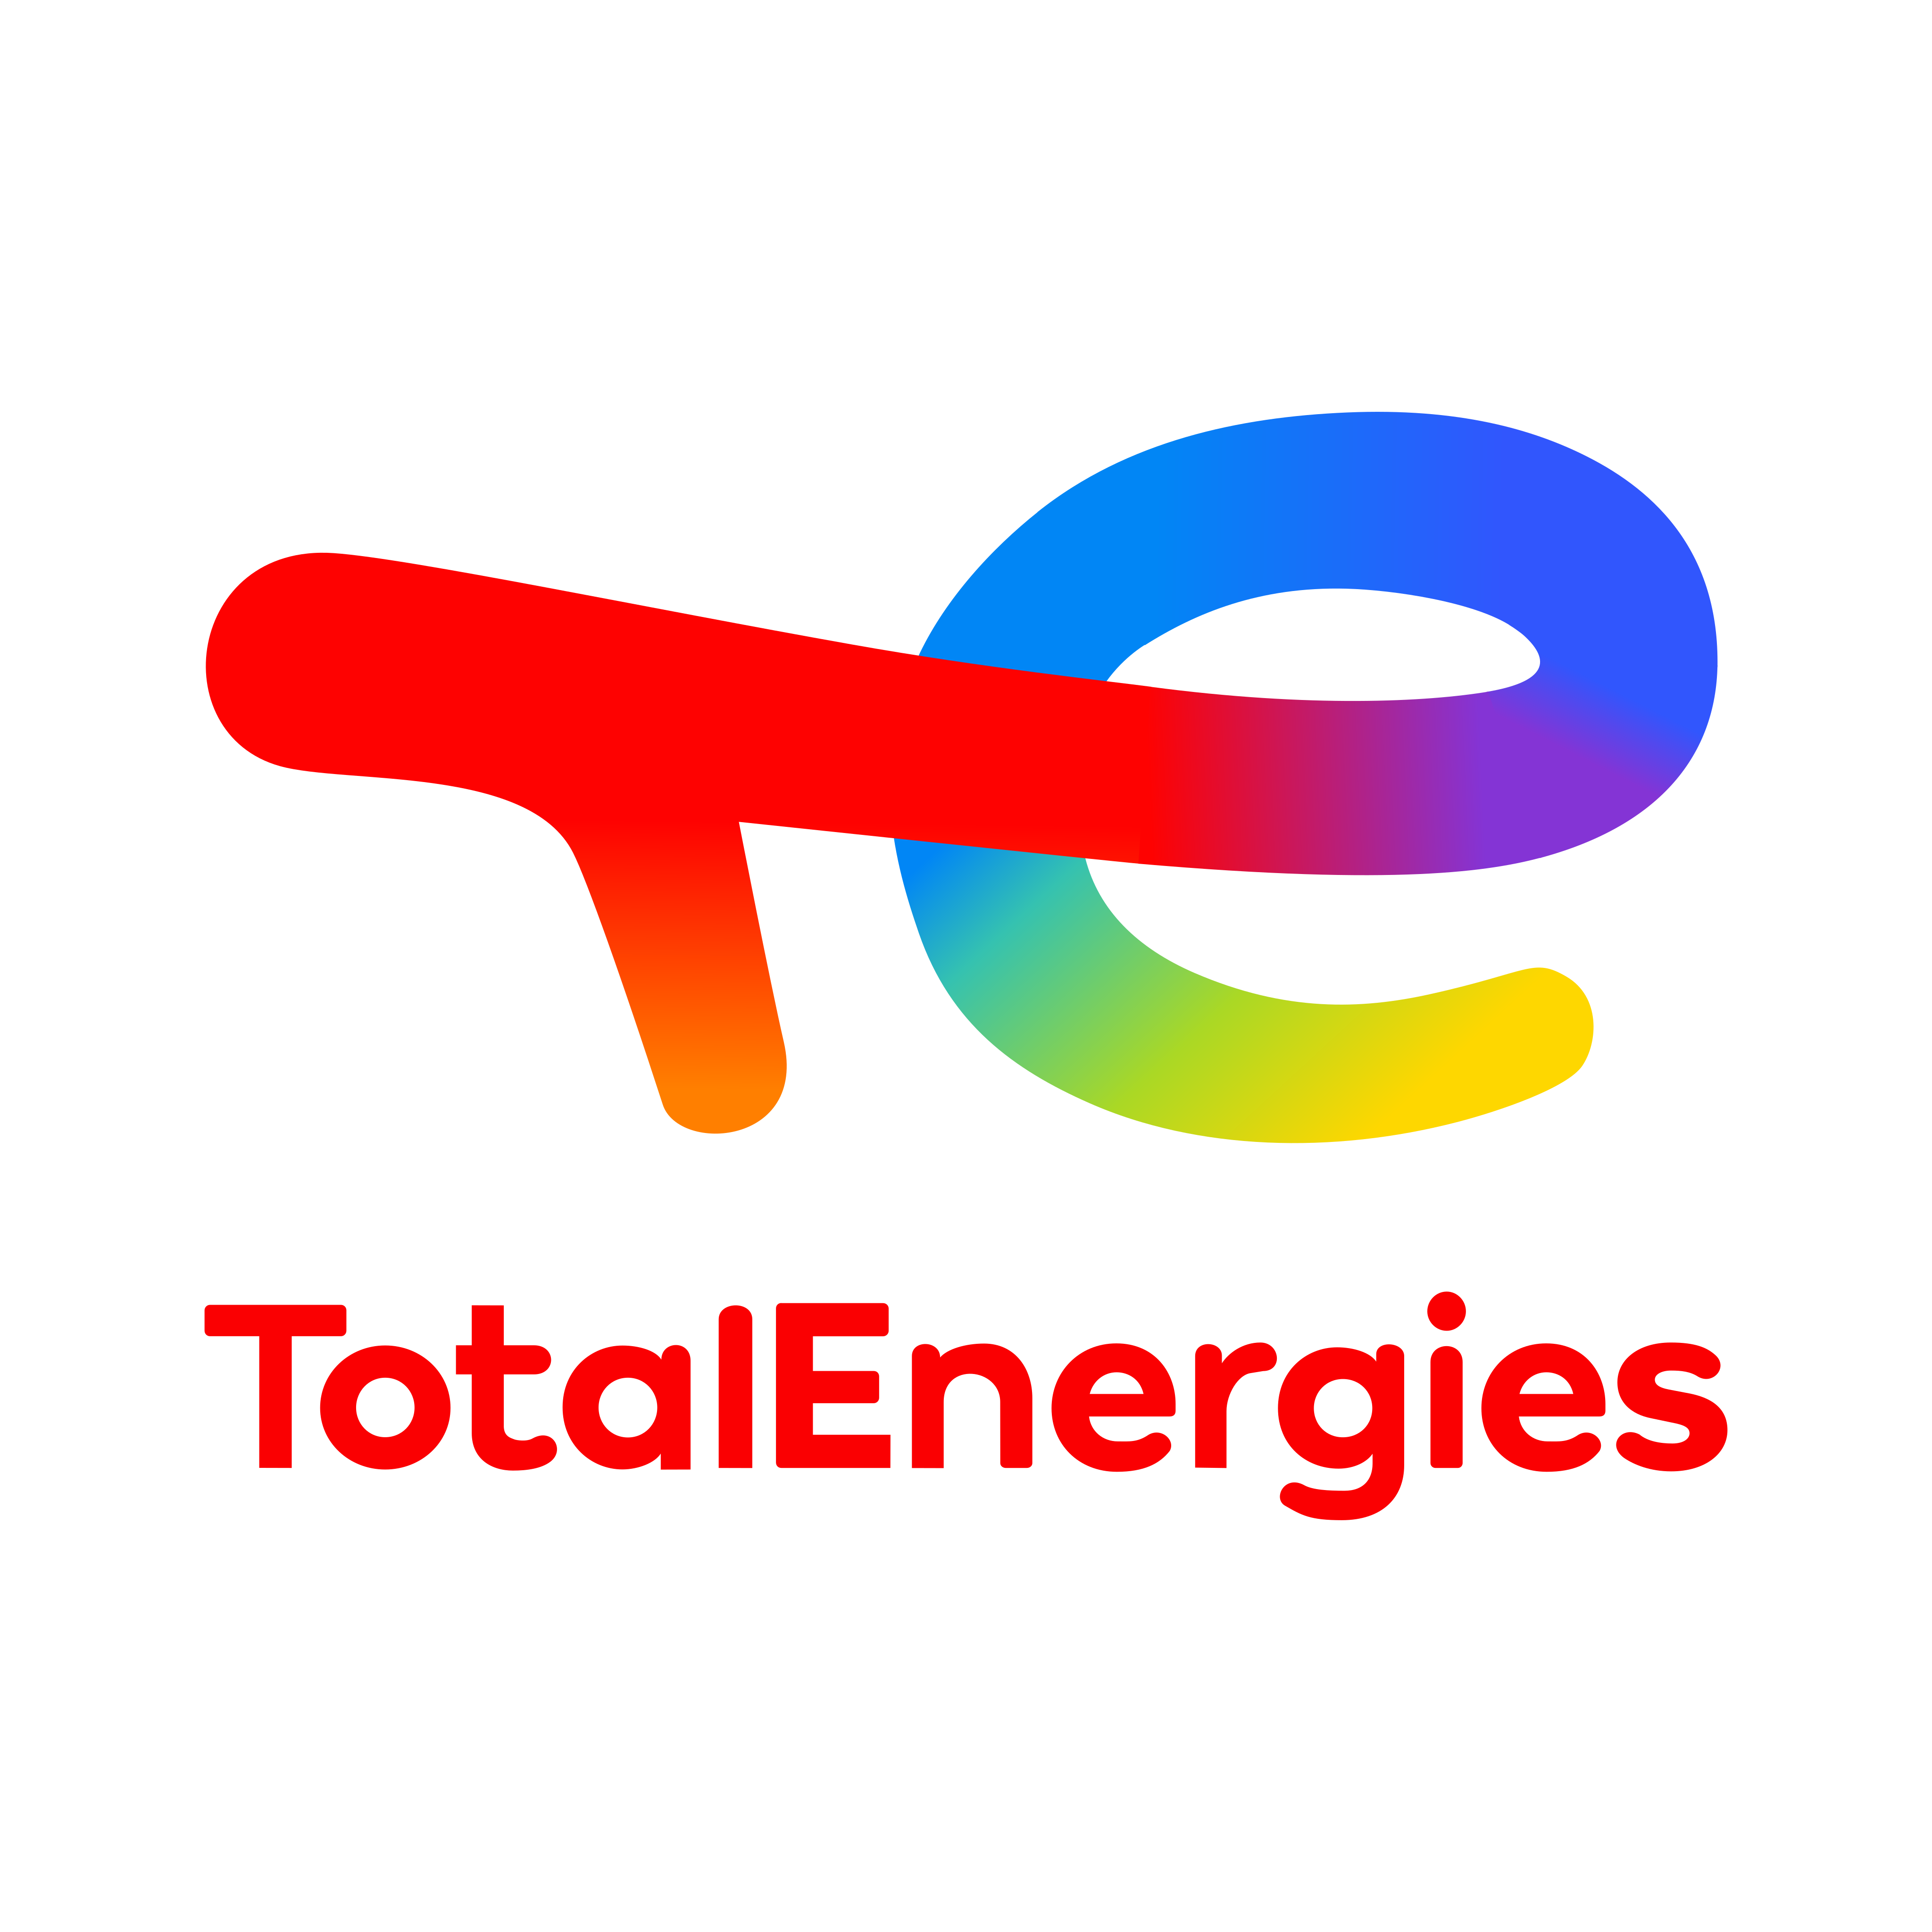 totalenergies logo 0 - TotalEnergies Logo